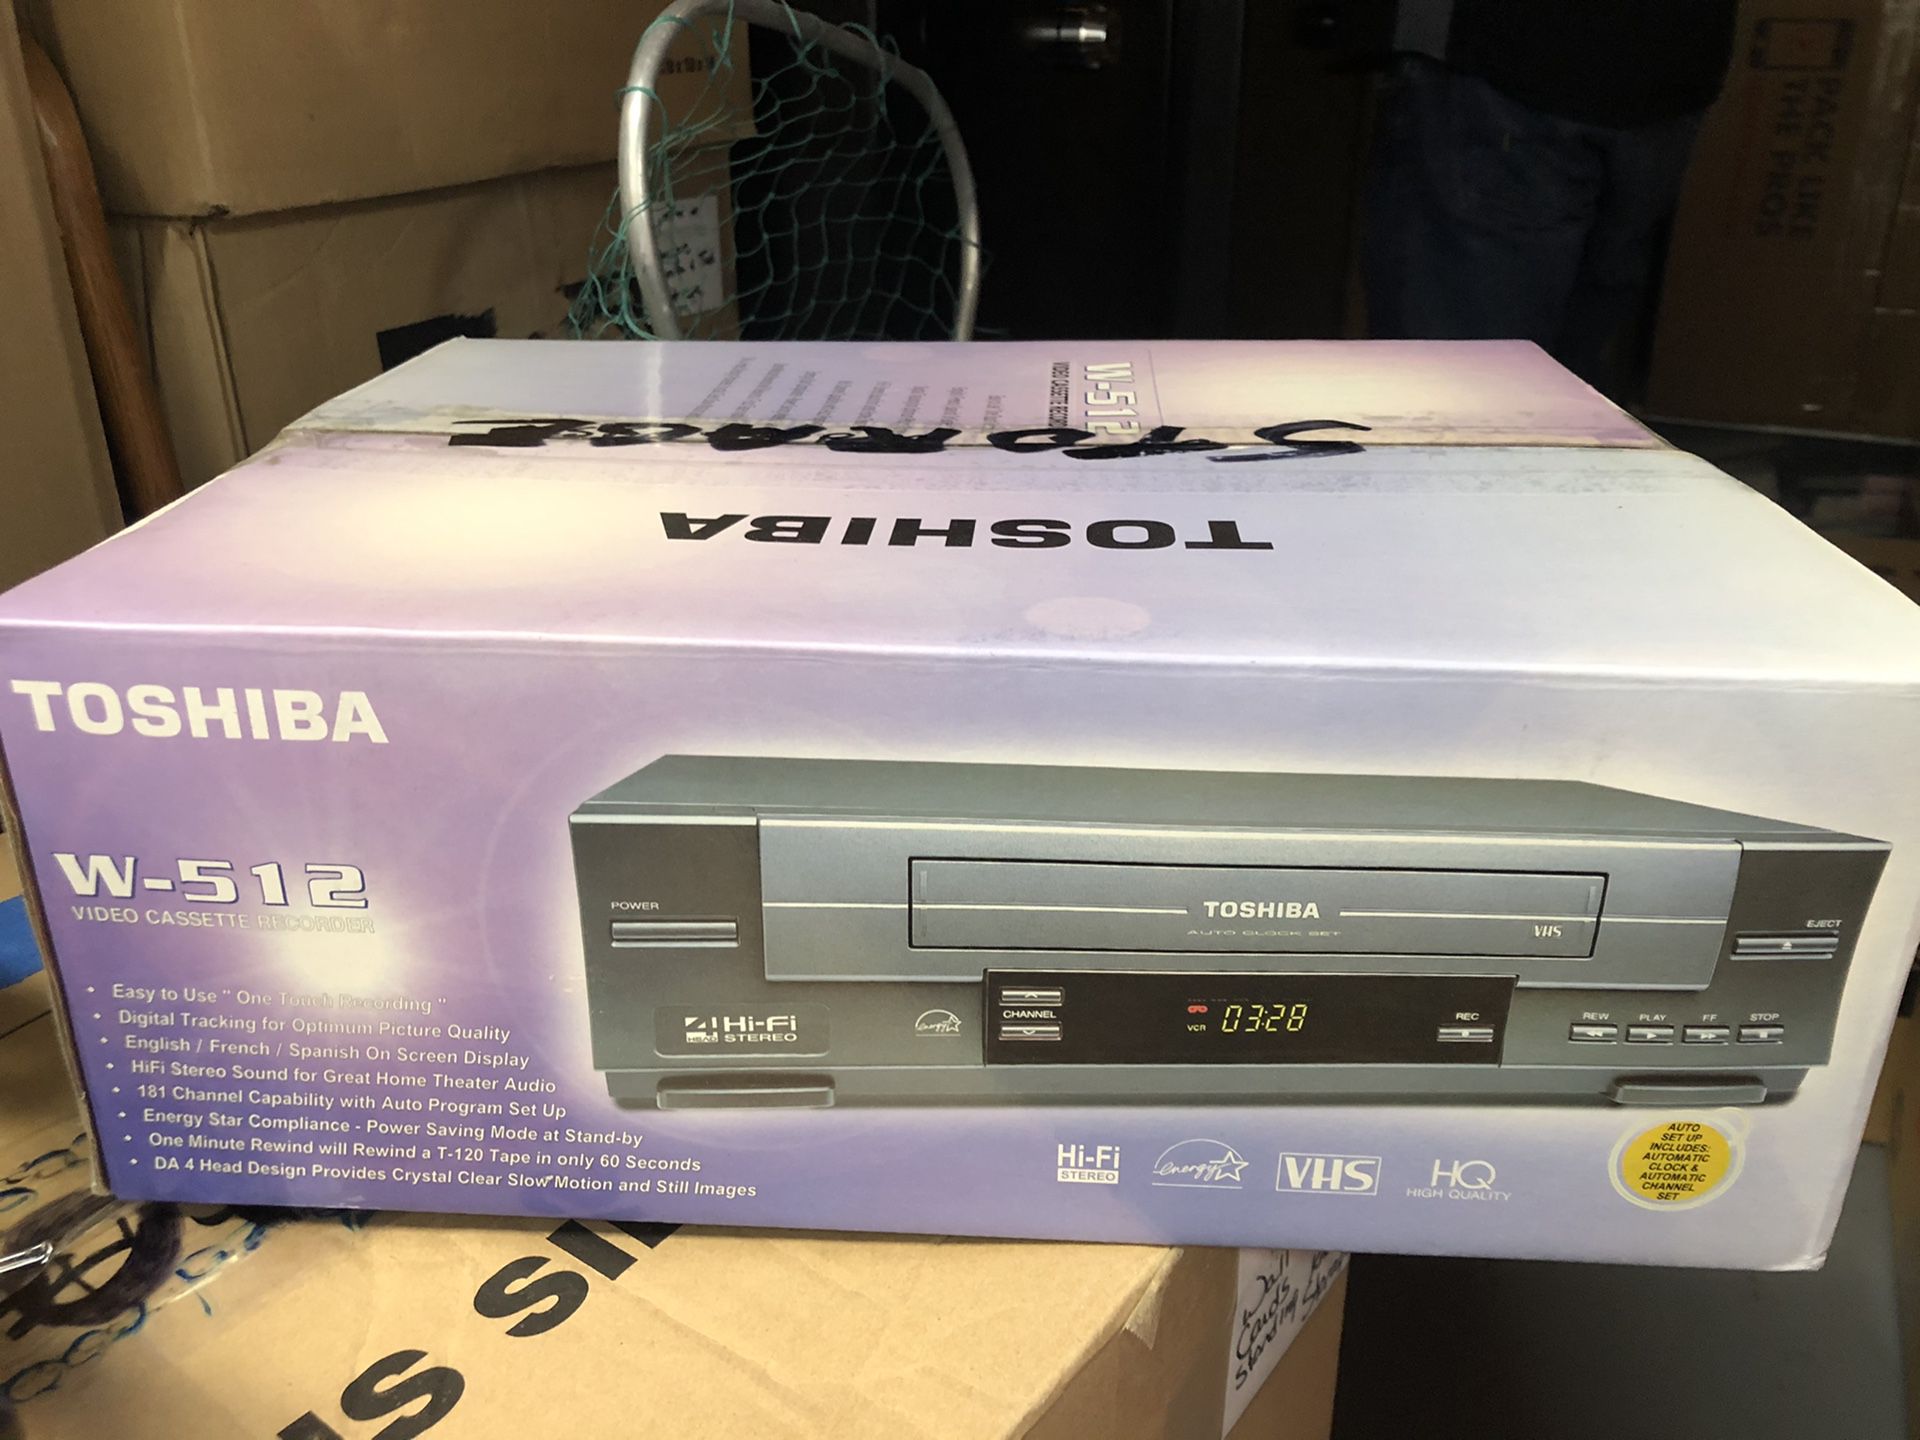 Toshiba W-512 VHS-VCR 4 Head Hi-Fi Stereo Recorder